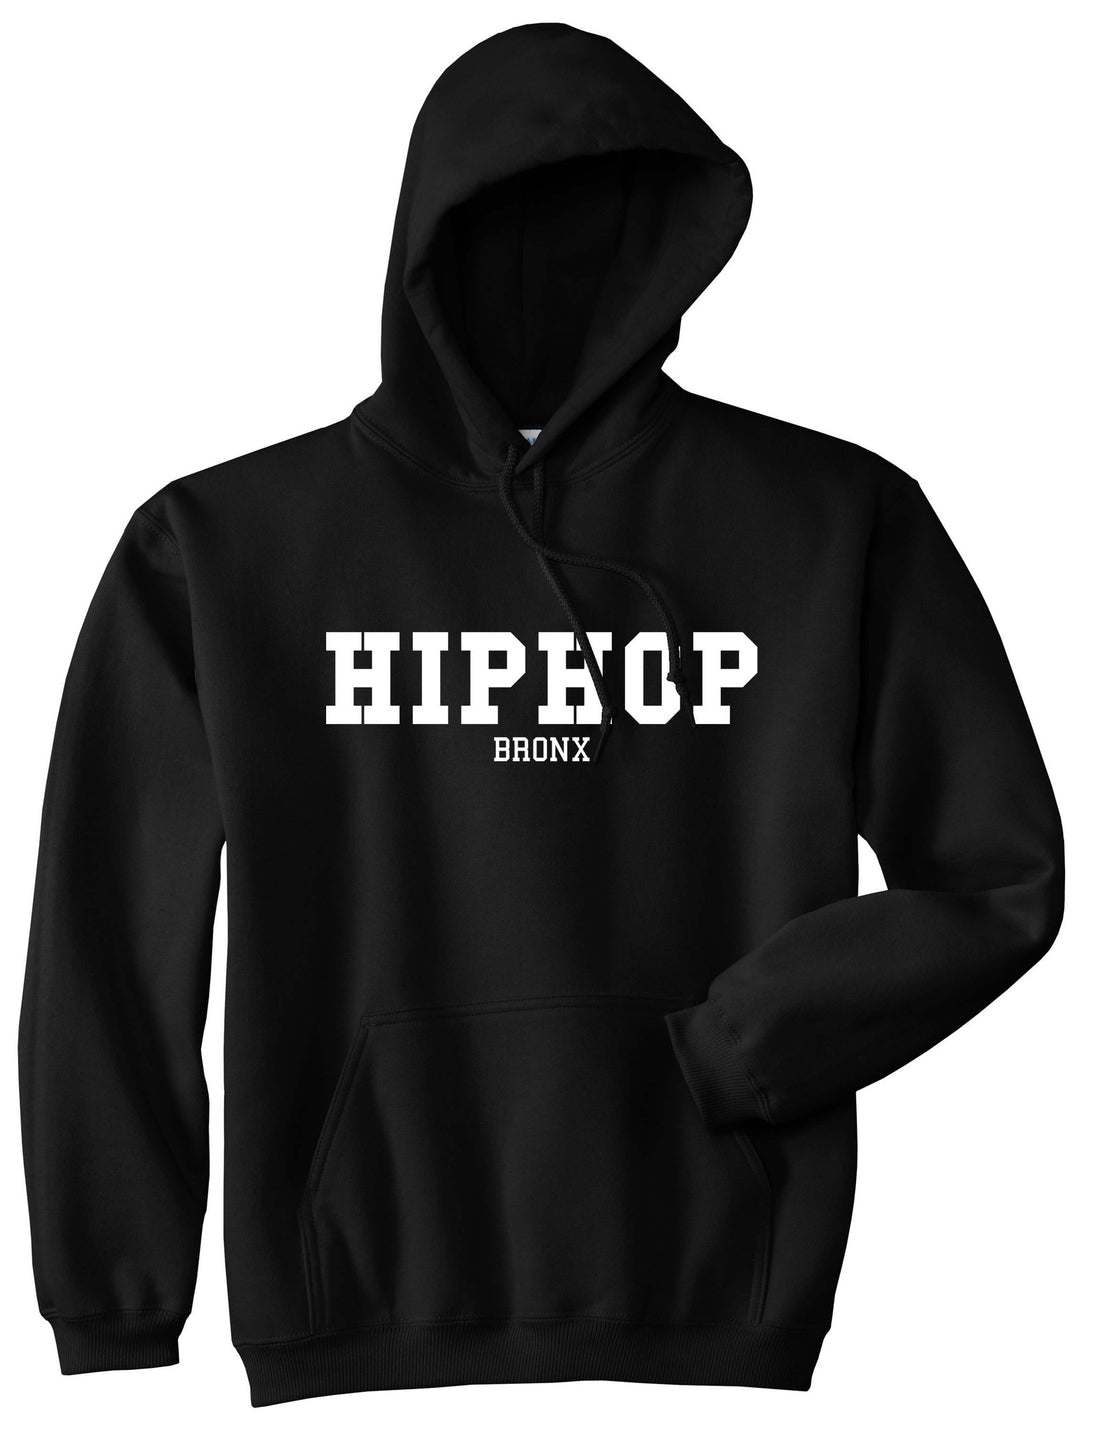 Hiphop the Bronx Pullover Hoodie Hoody in Black by Kings Of NY